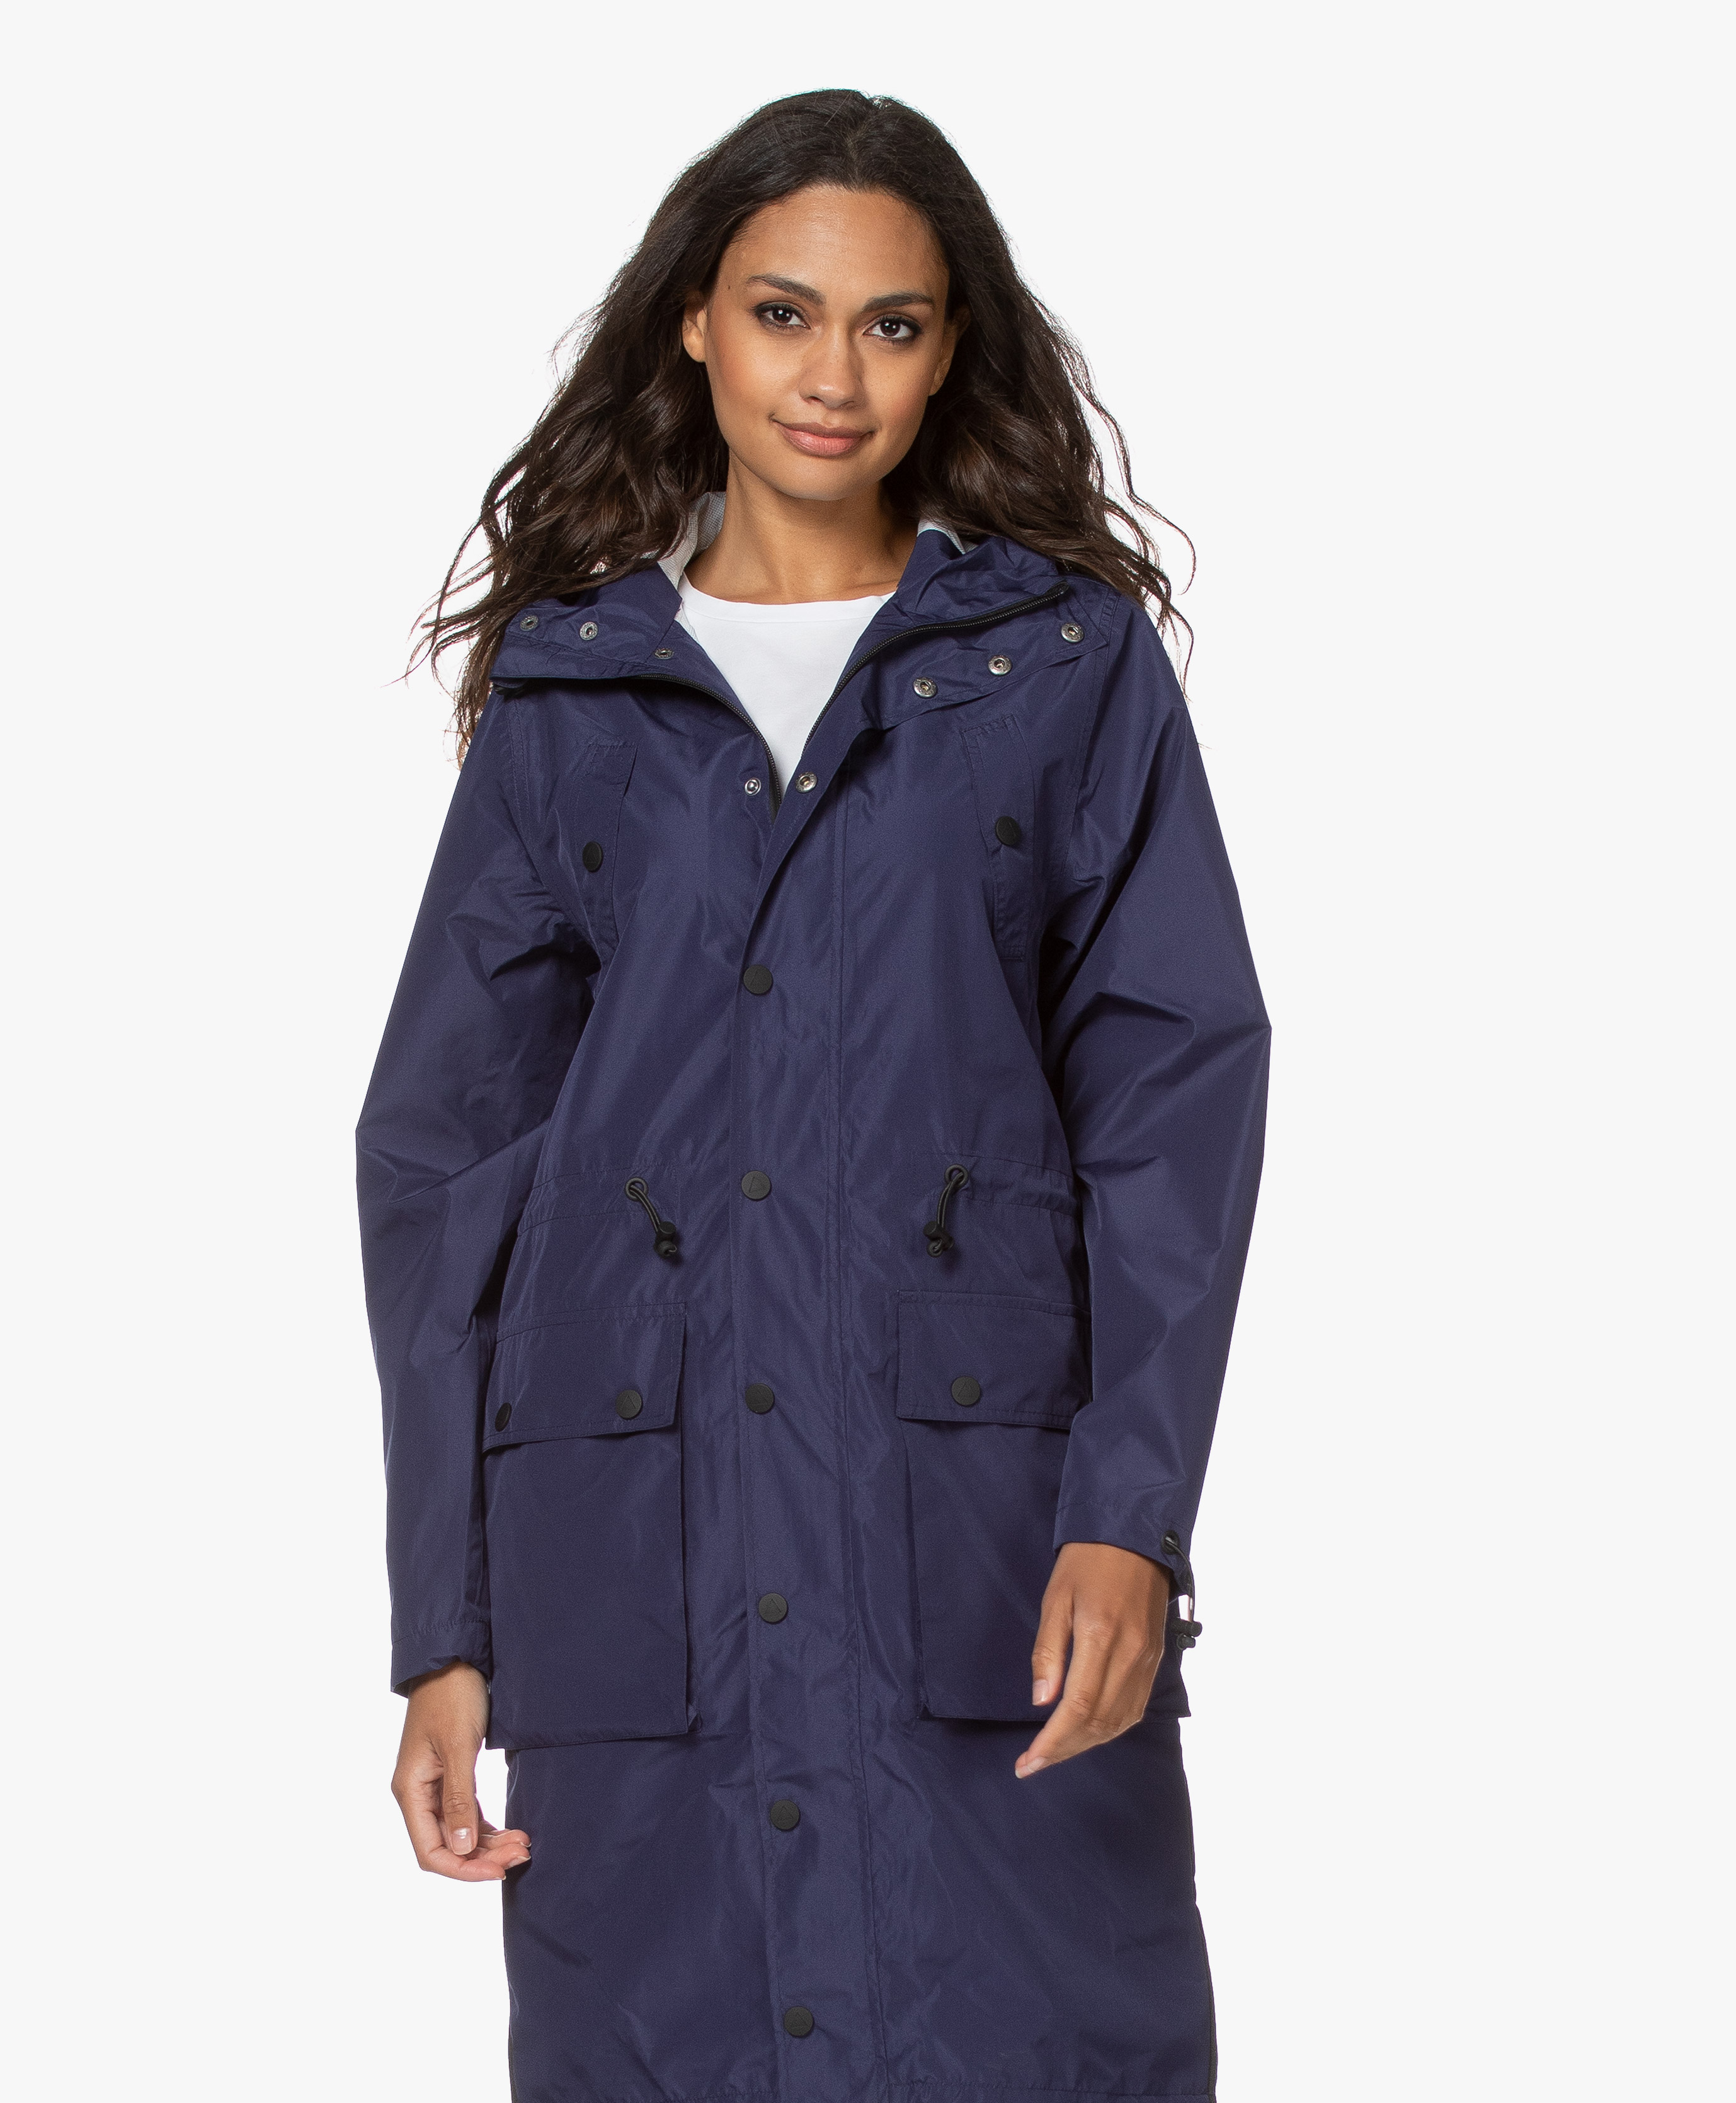 Maium Rainwear 2-in-1 Parka Lightweight Raincoat - Medieval Blue ...